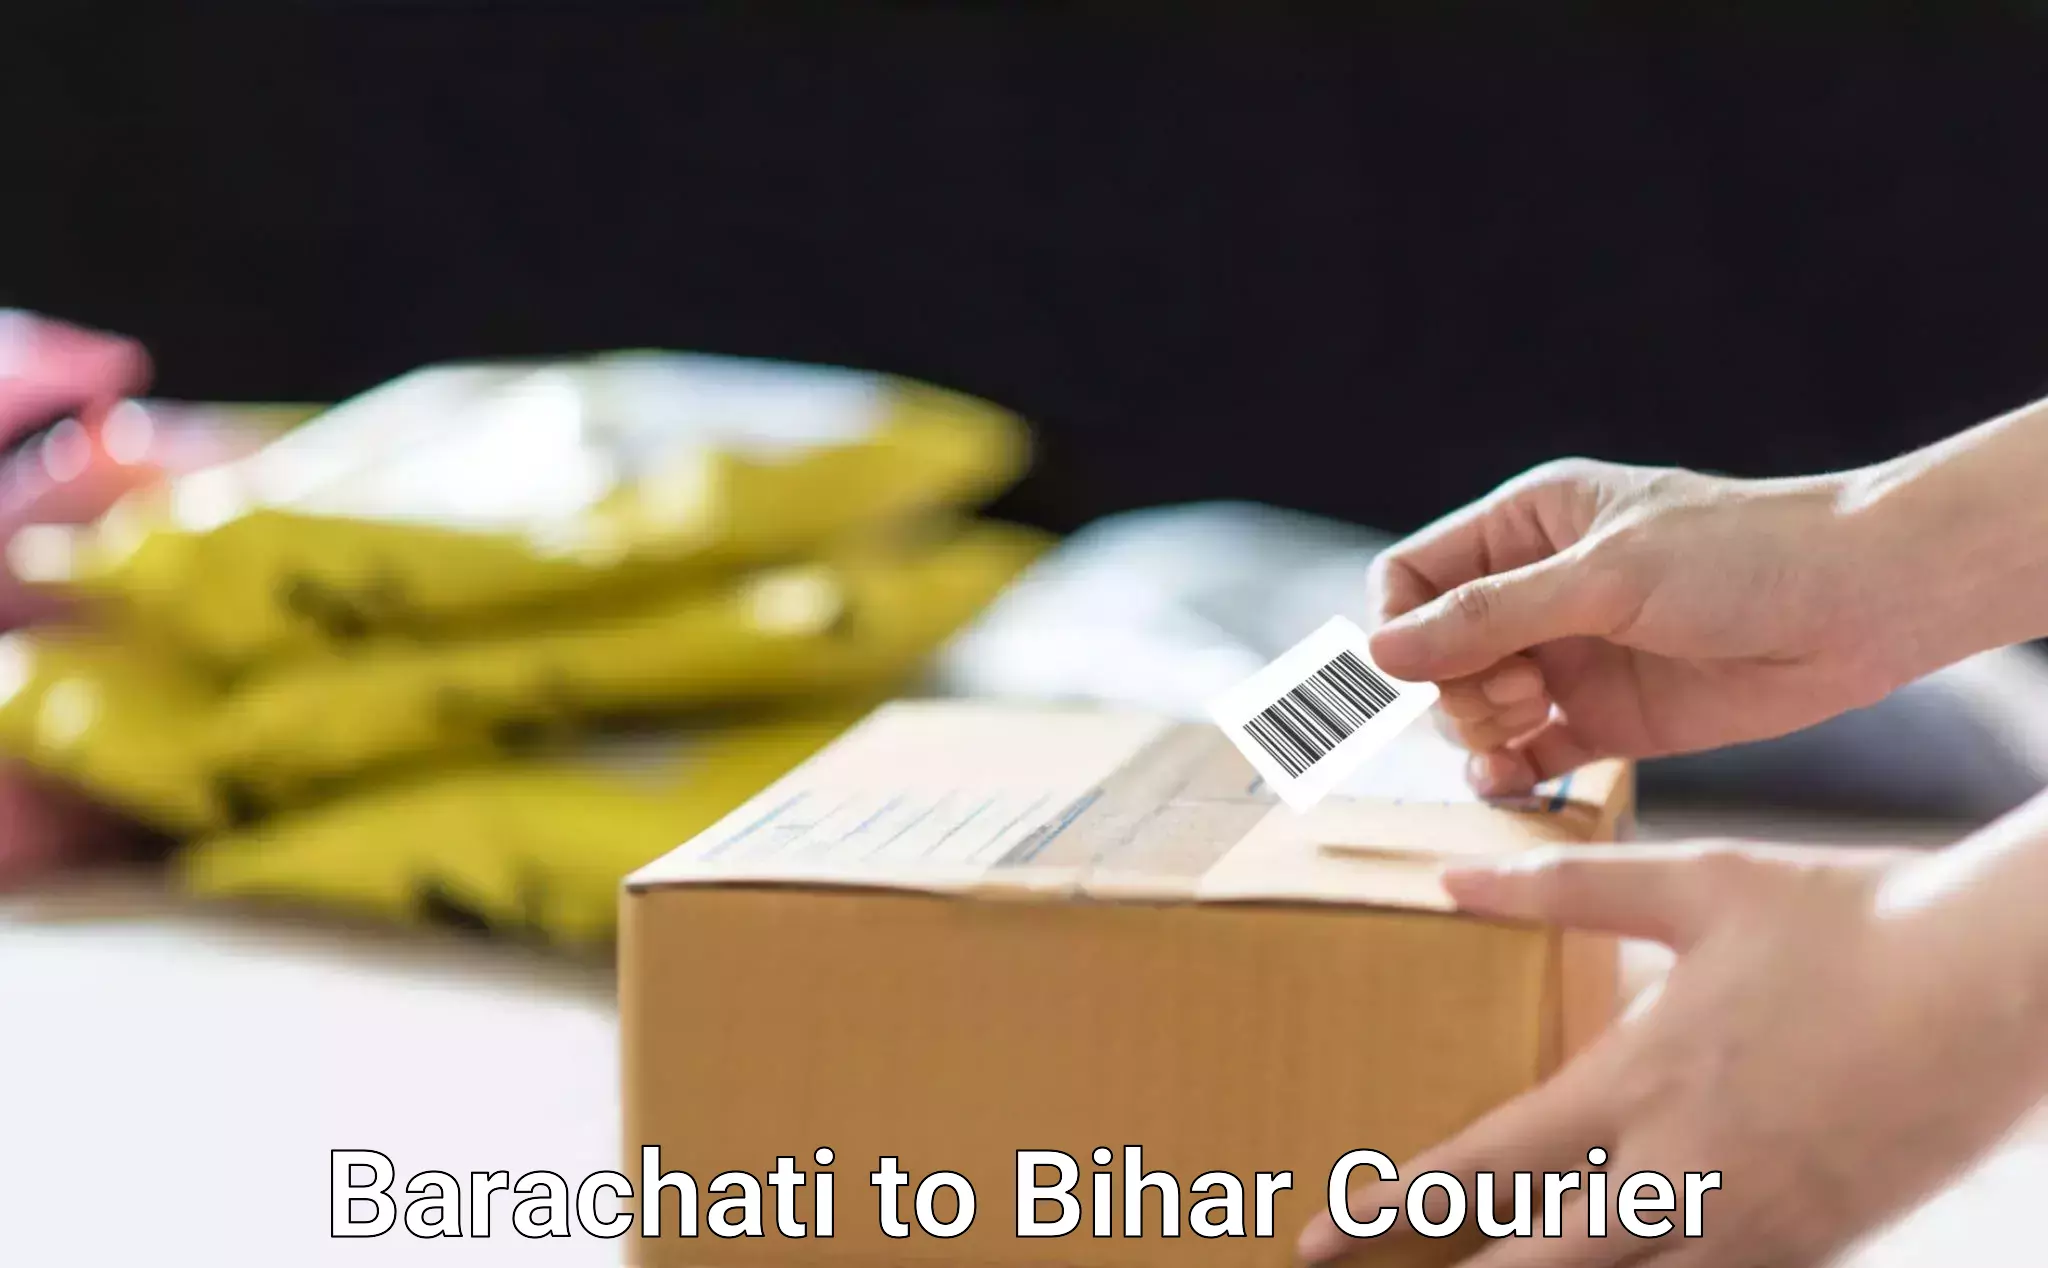 Professional moving company Barachati to Bihar